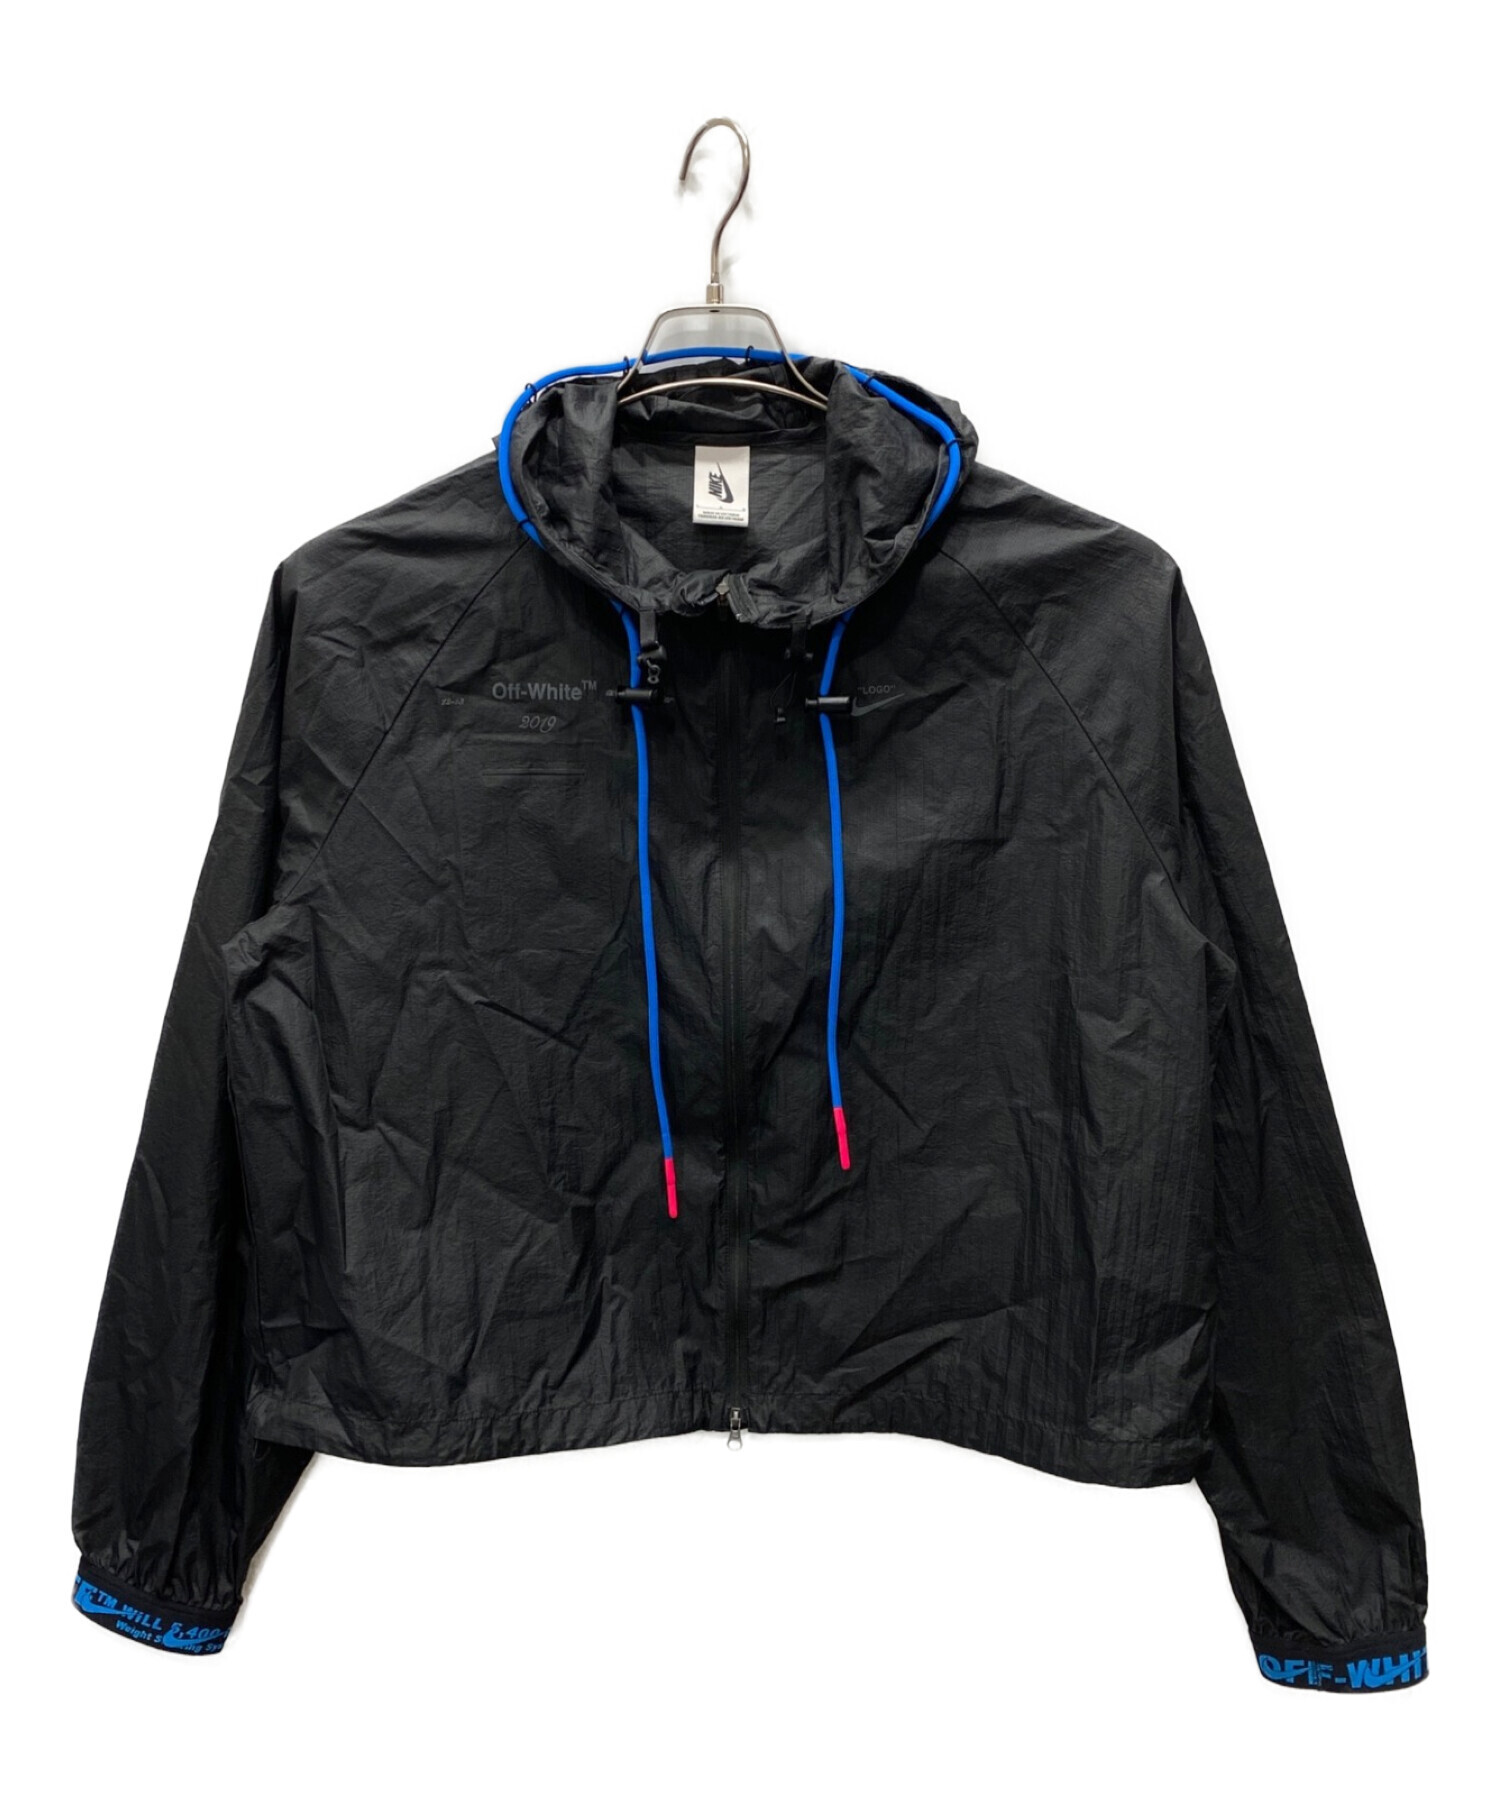 NIKE (ナイキ) OFFWHITE (オフホワイト) NRG Jacket ブラック サイズ:L